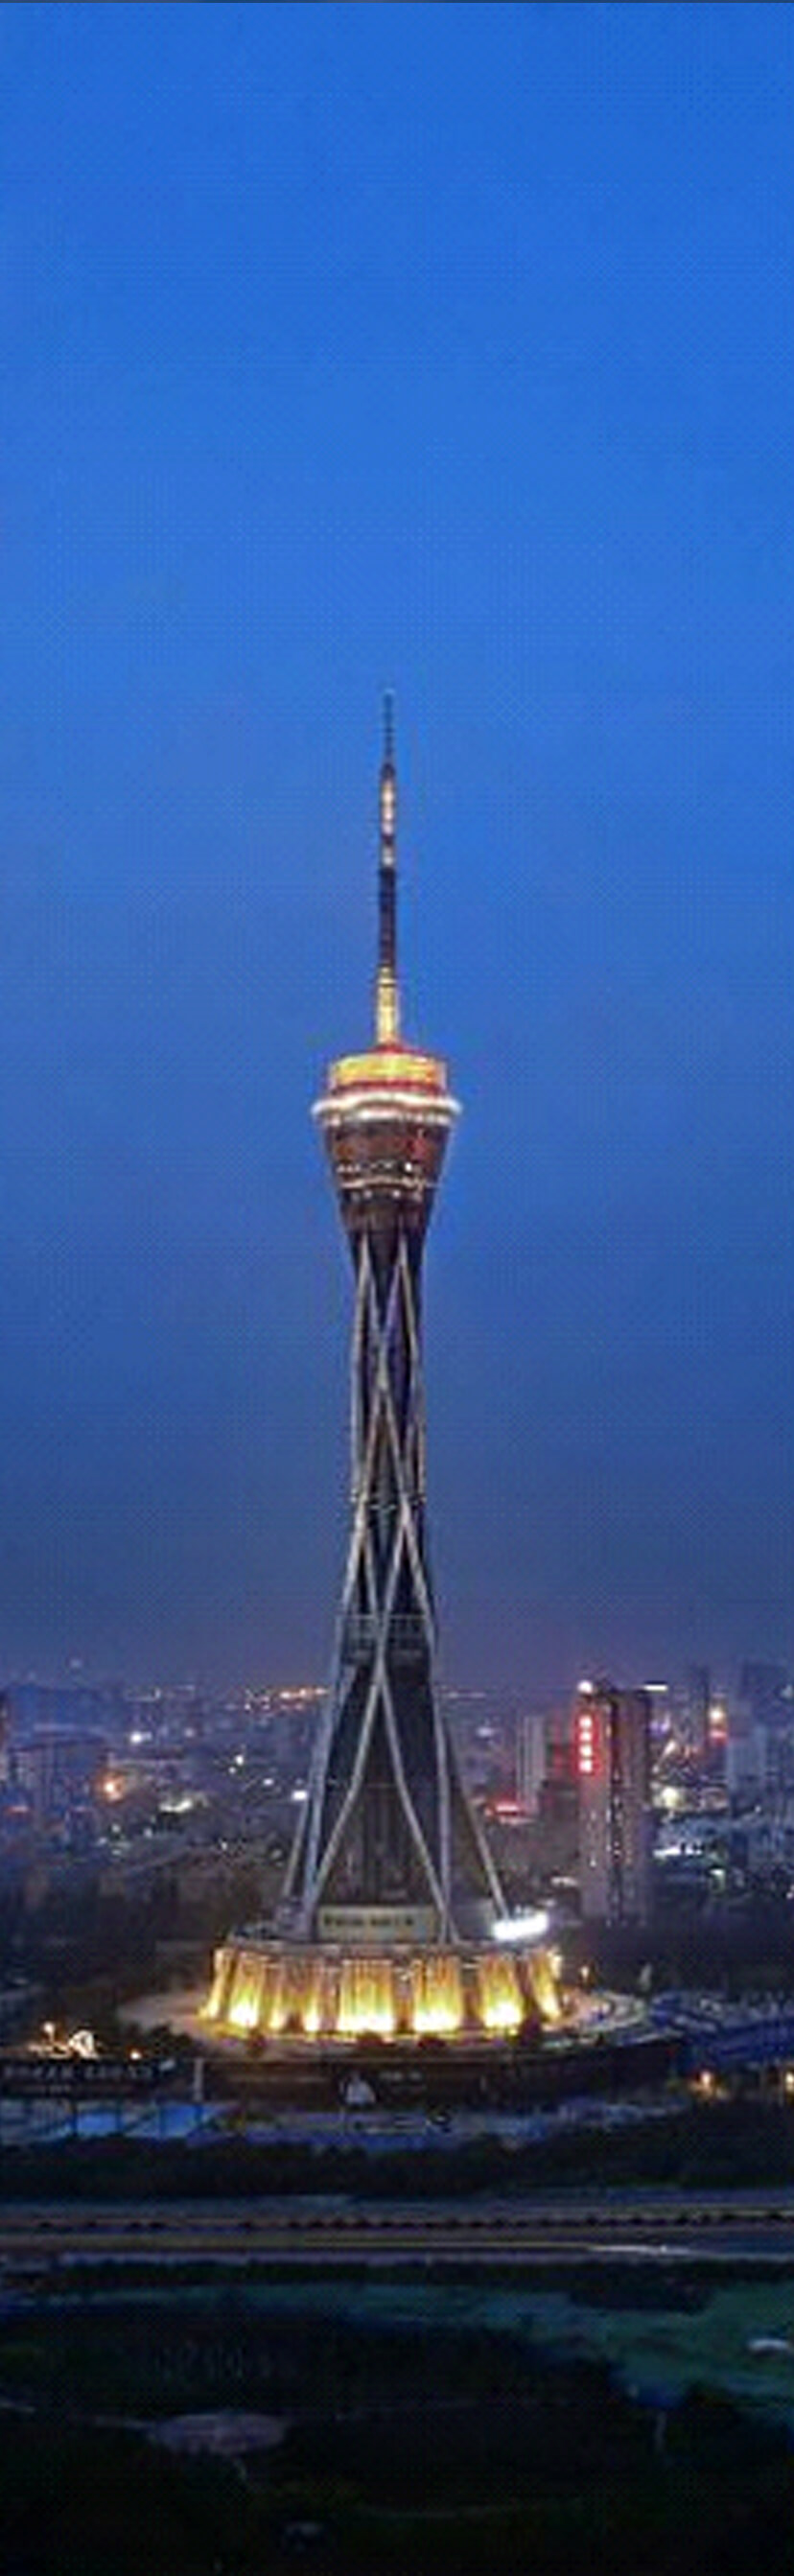 Henan Tower(FU Tower)